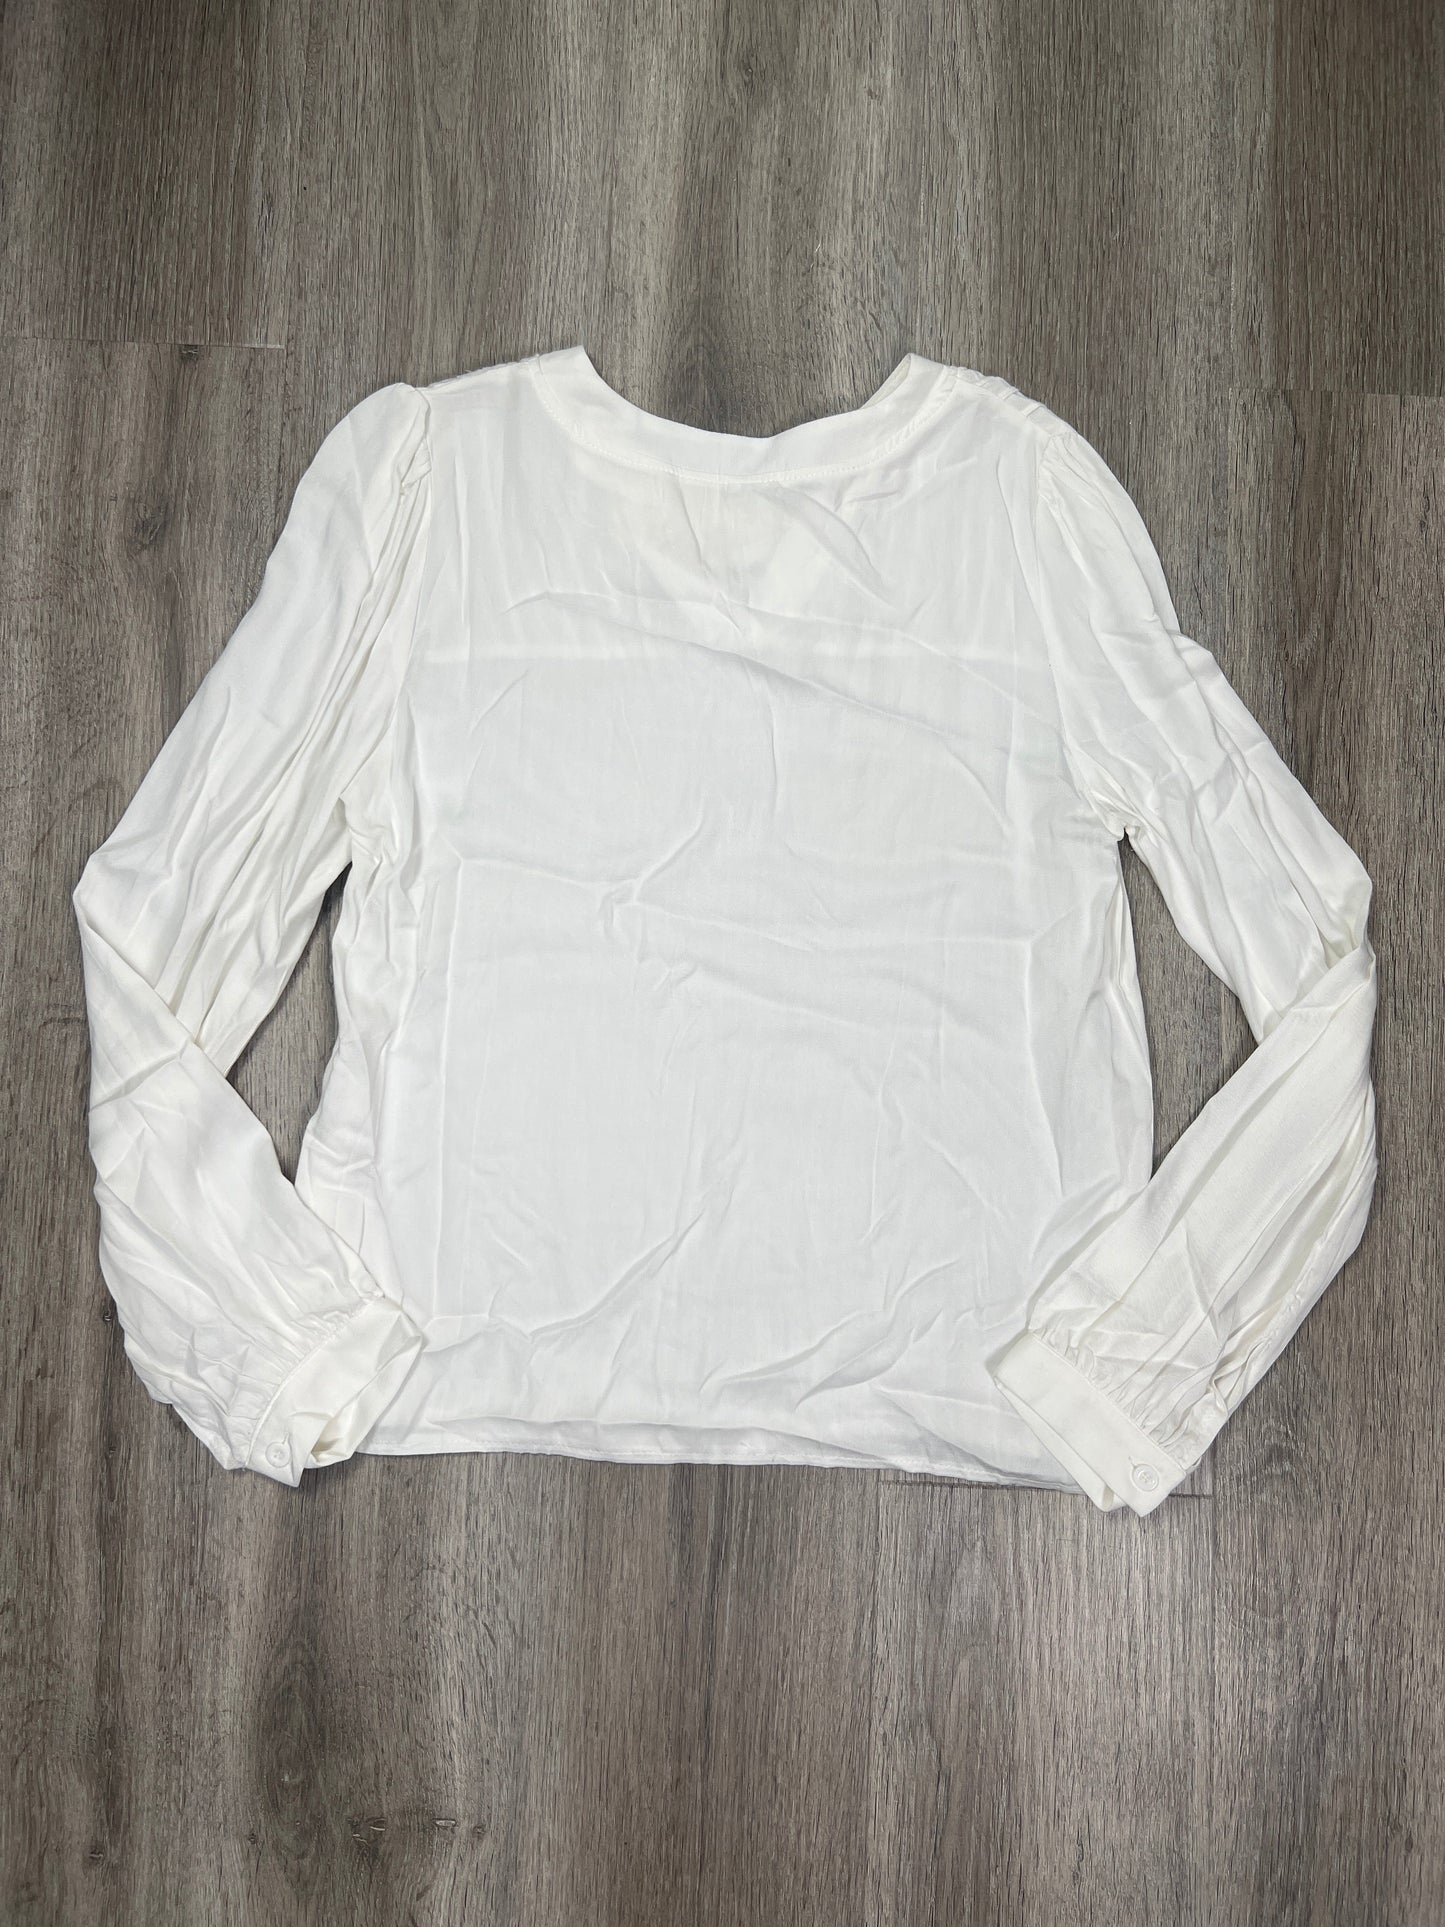 White Blouse Long Sleeve Ninexis, Size S